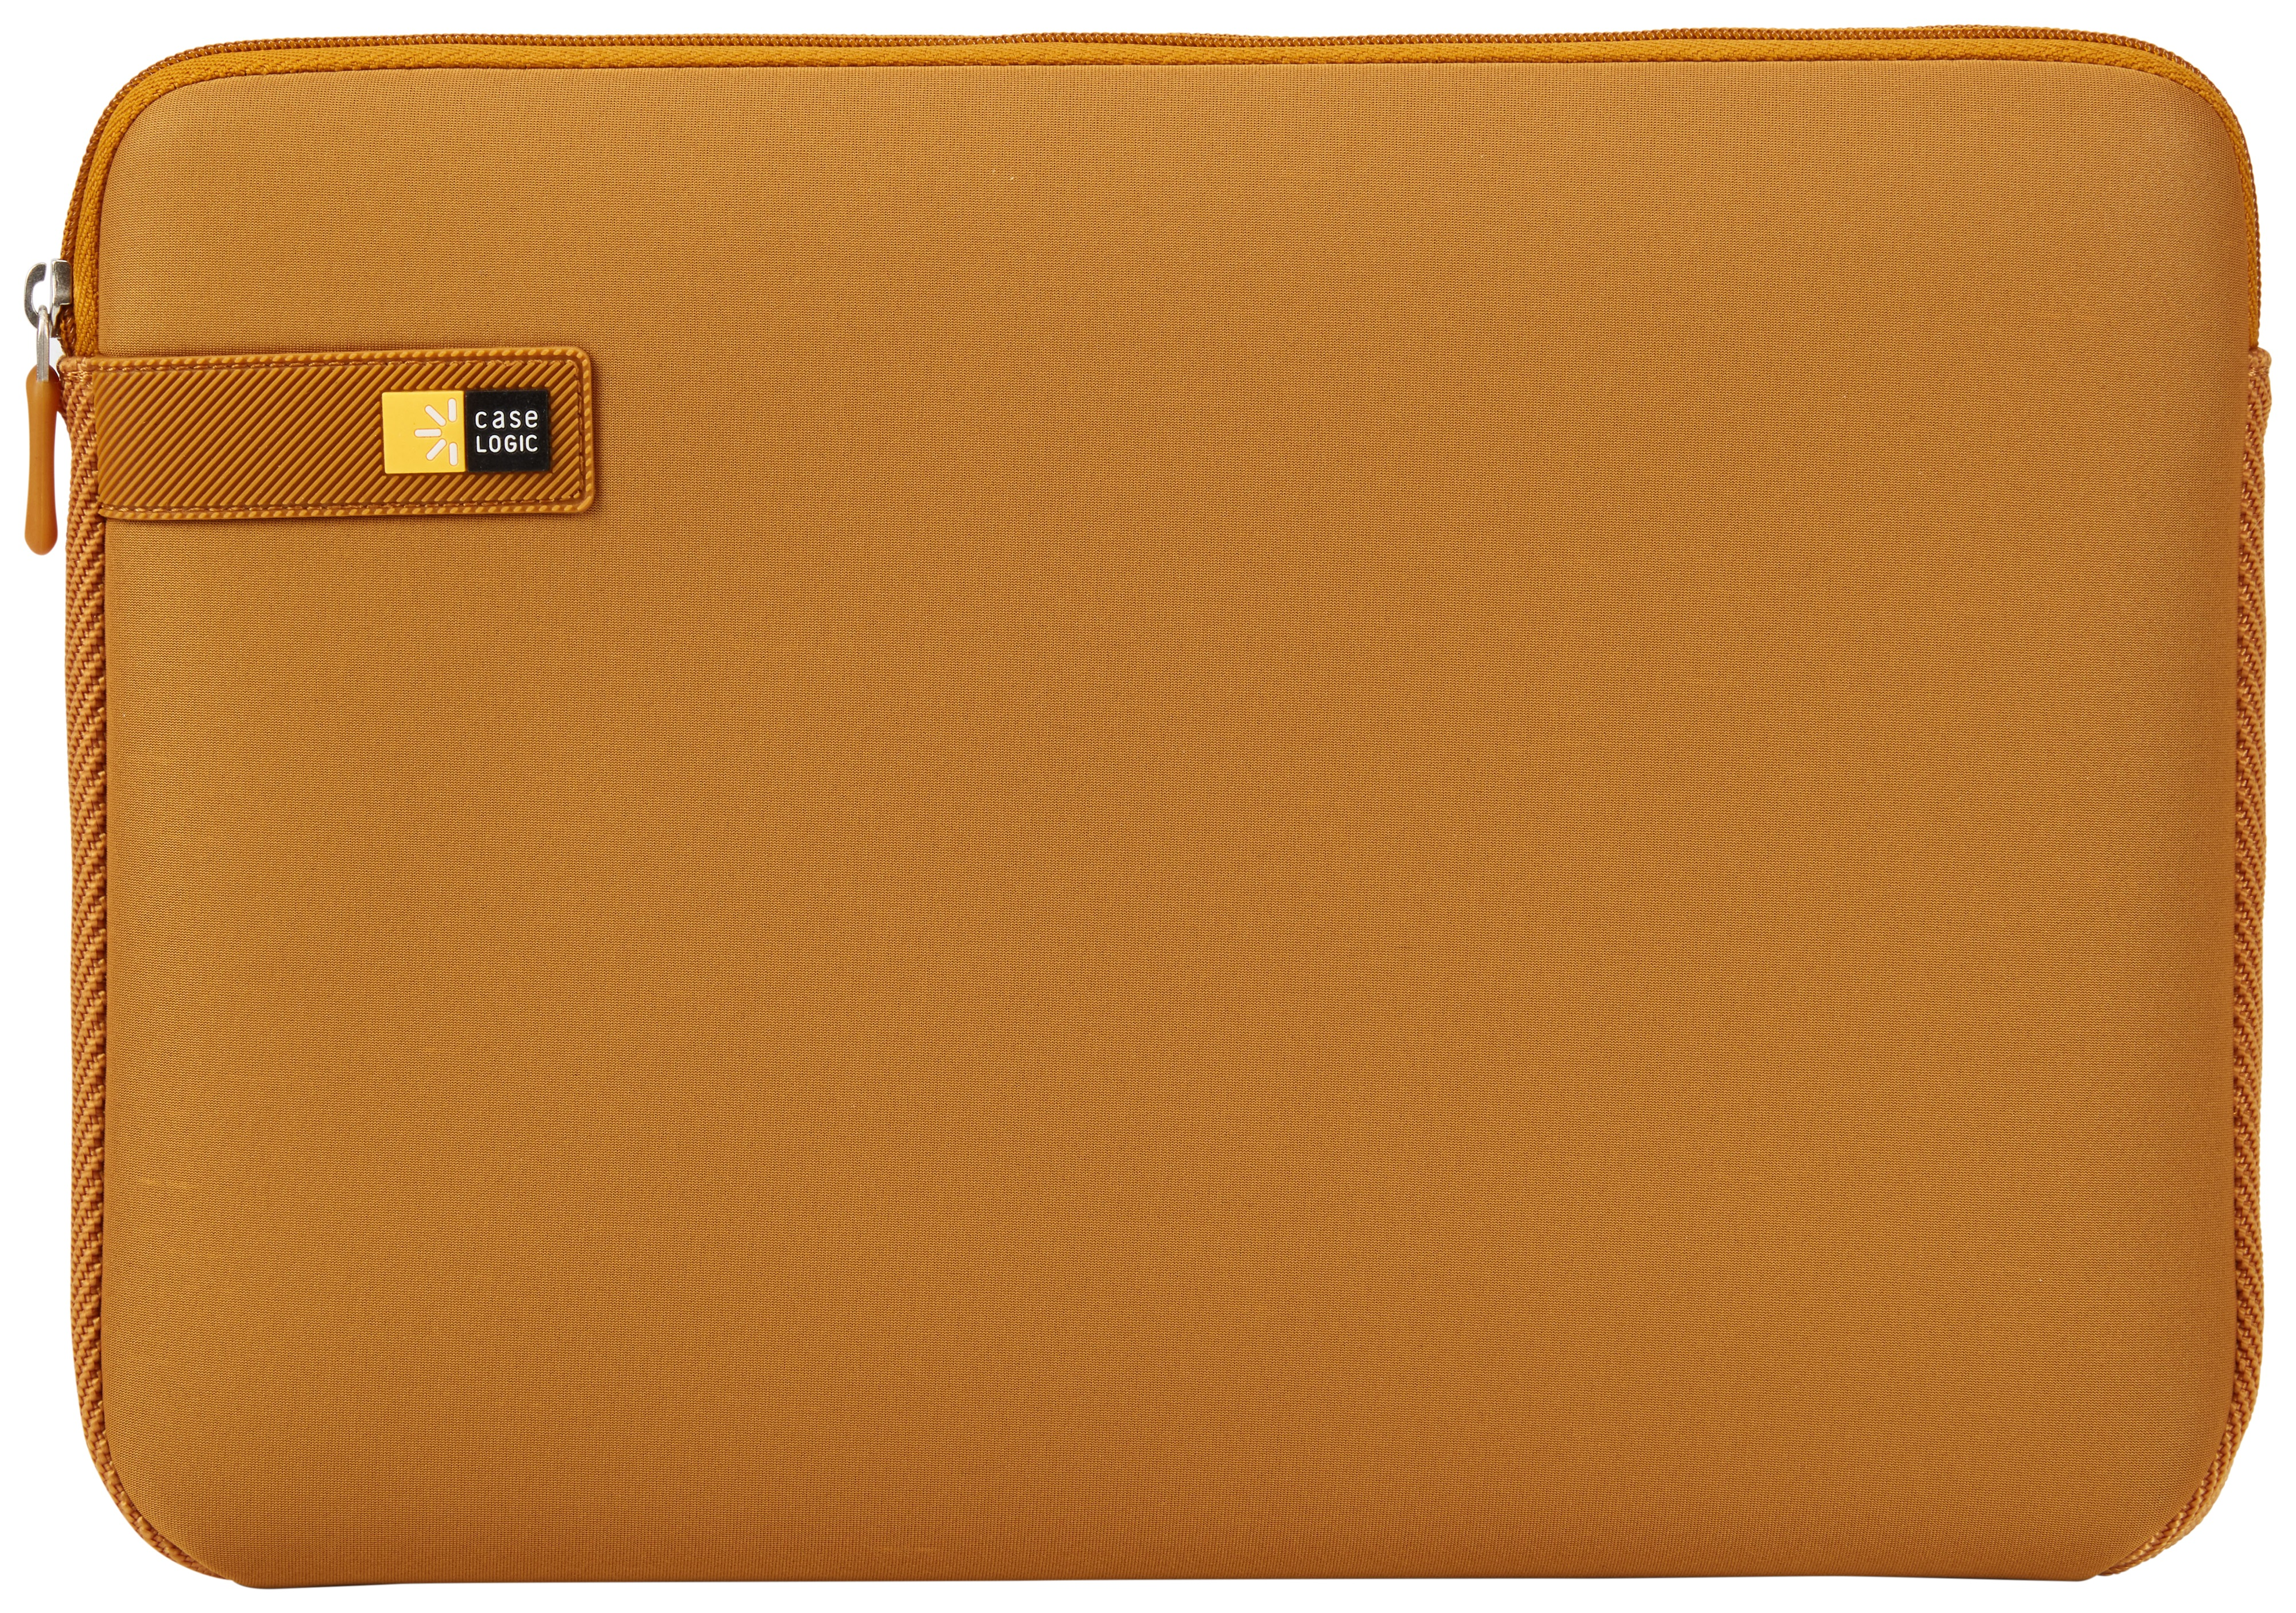 CASE LOGIC Laps Notebooksleeve Buckthorn EVA-Schaum, für Universal Sleeve